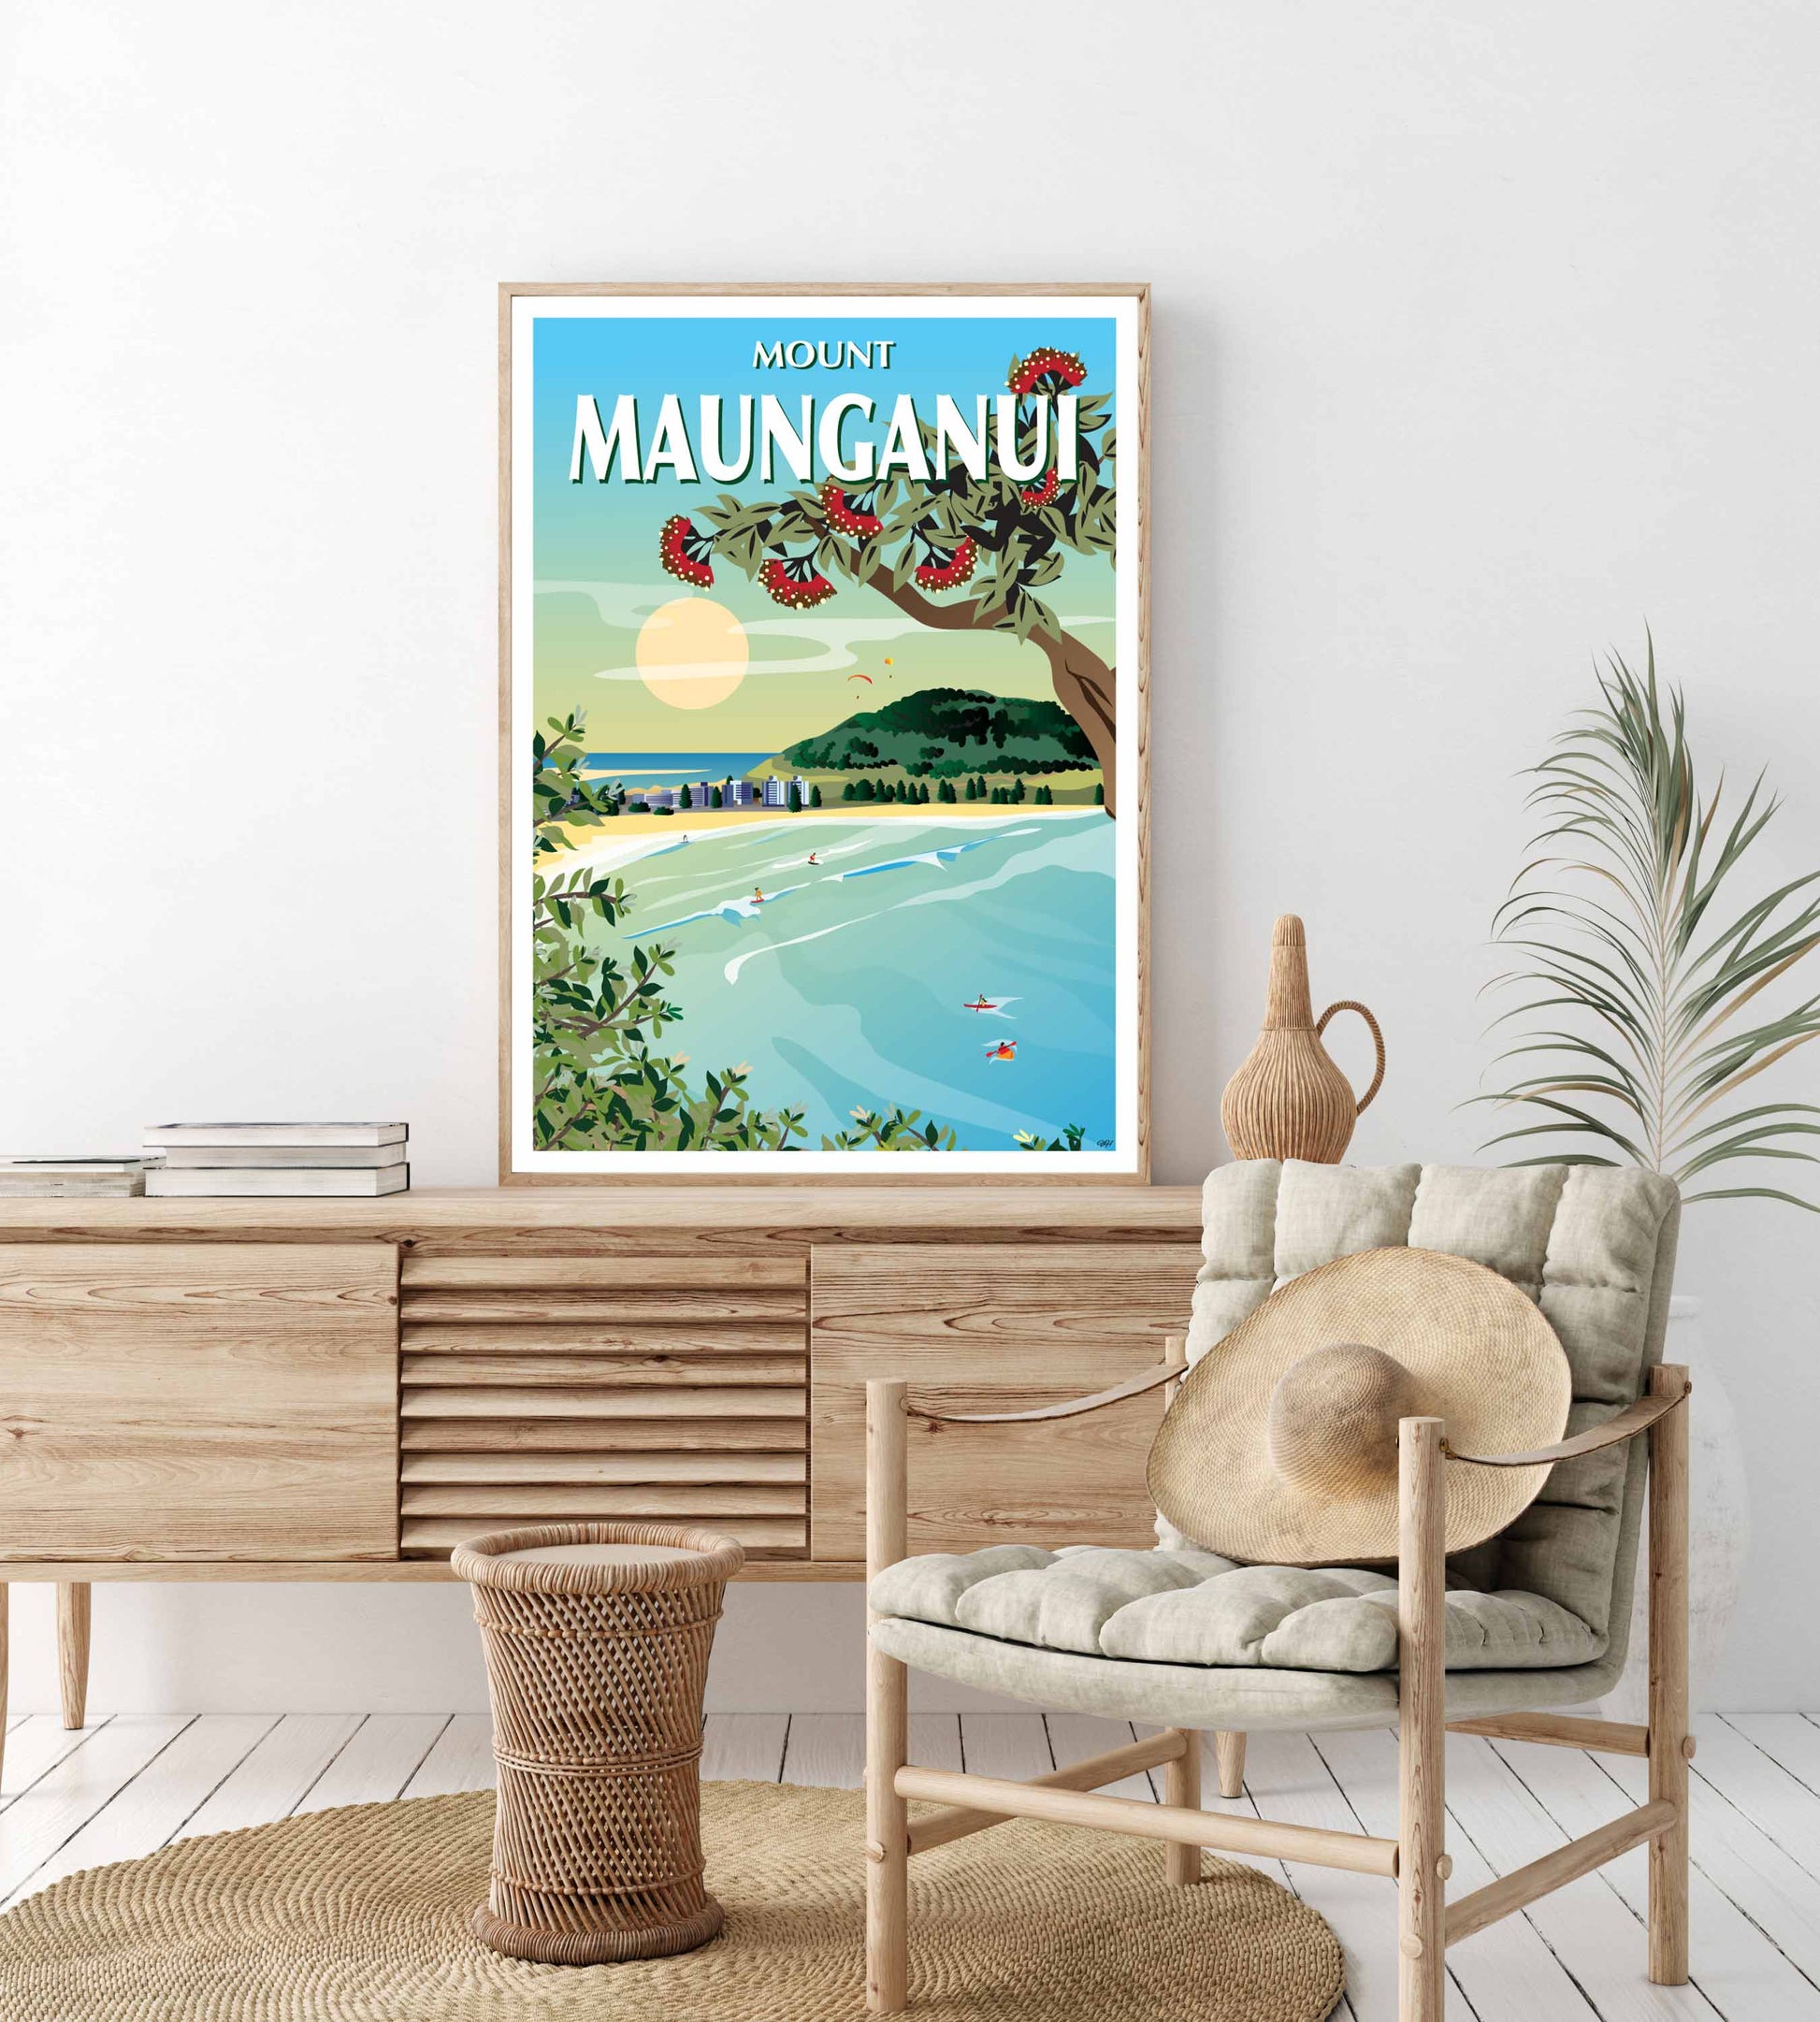 Mount Maunganui Travel Poster, New Zealand - VivaHome